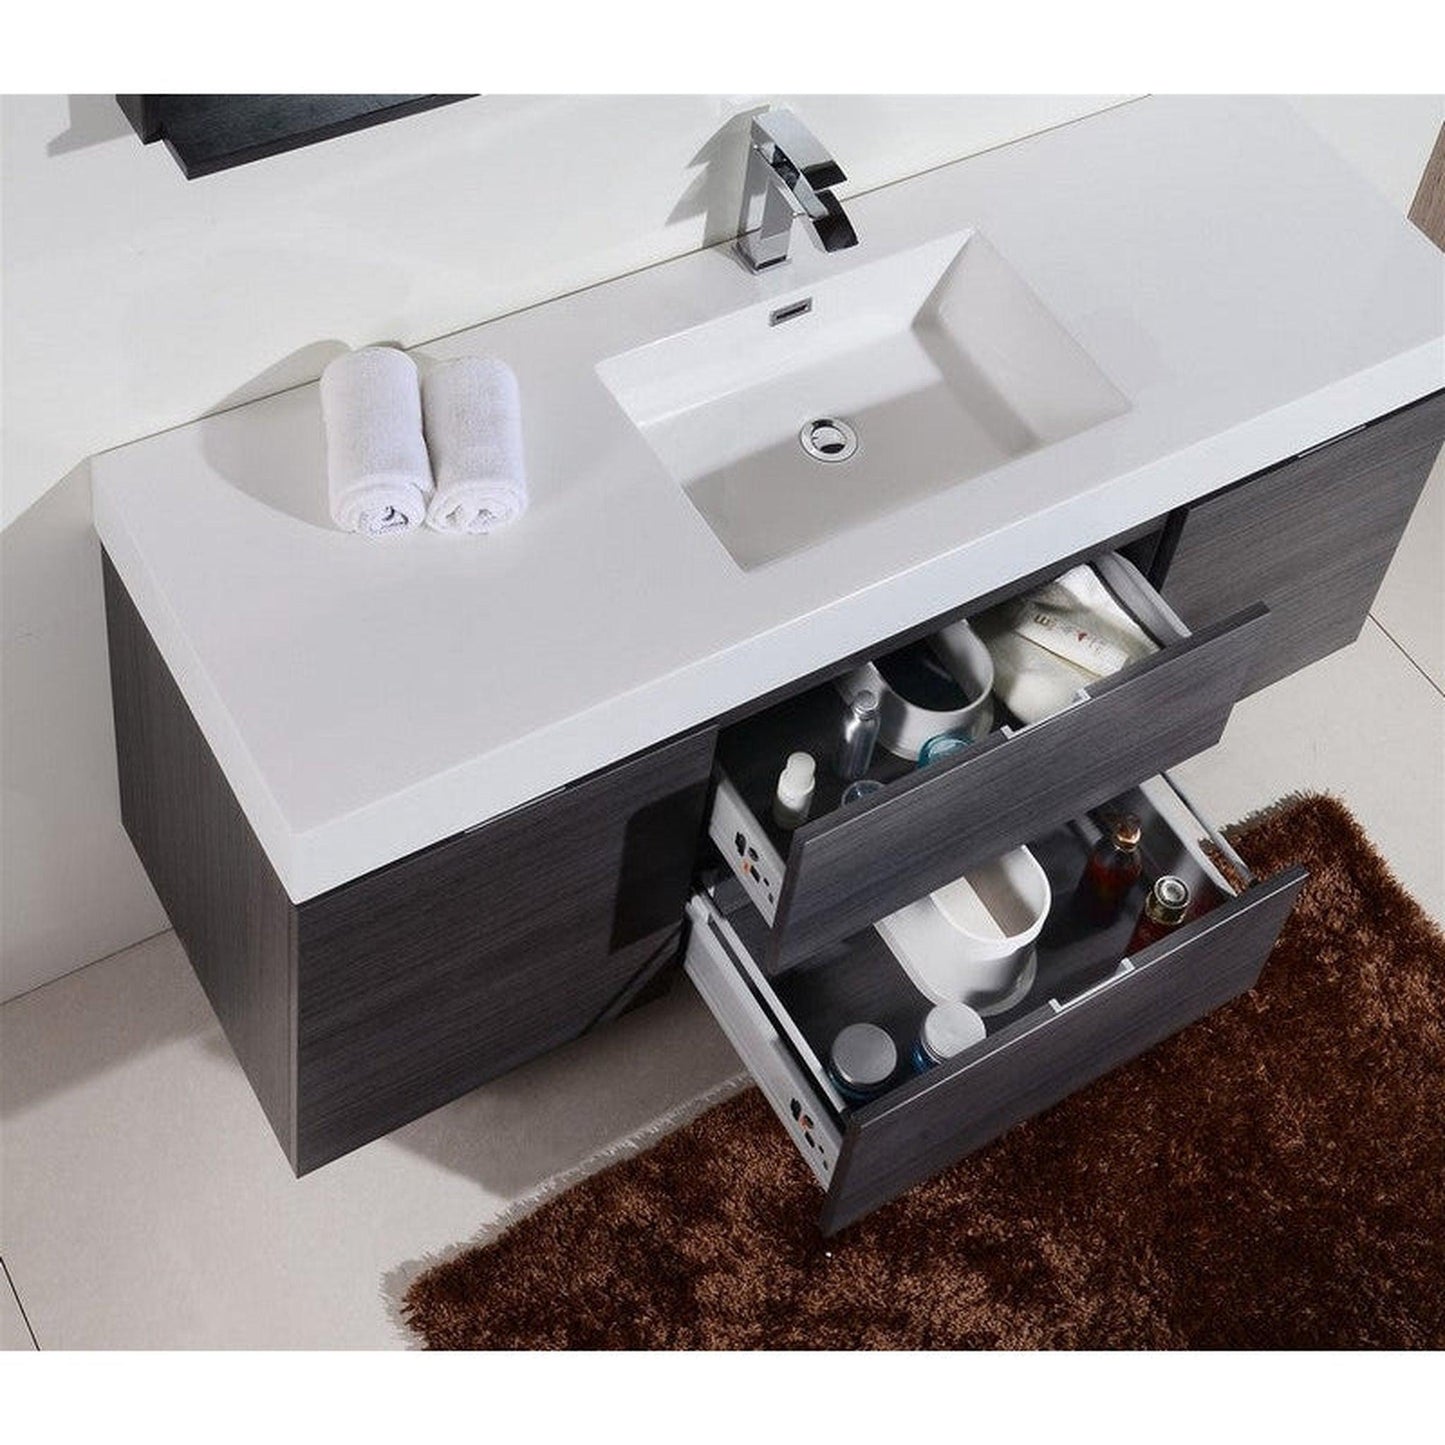 KubeBath Bliss 60" Gray Oak Wall-Mounted Modern Bathroom Vanity With Single Integrated Acrylic Sink With Overflow